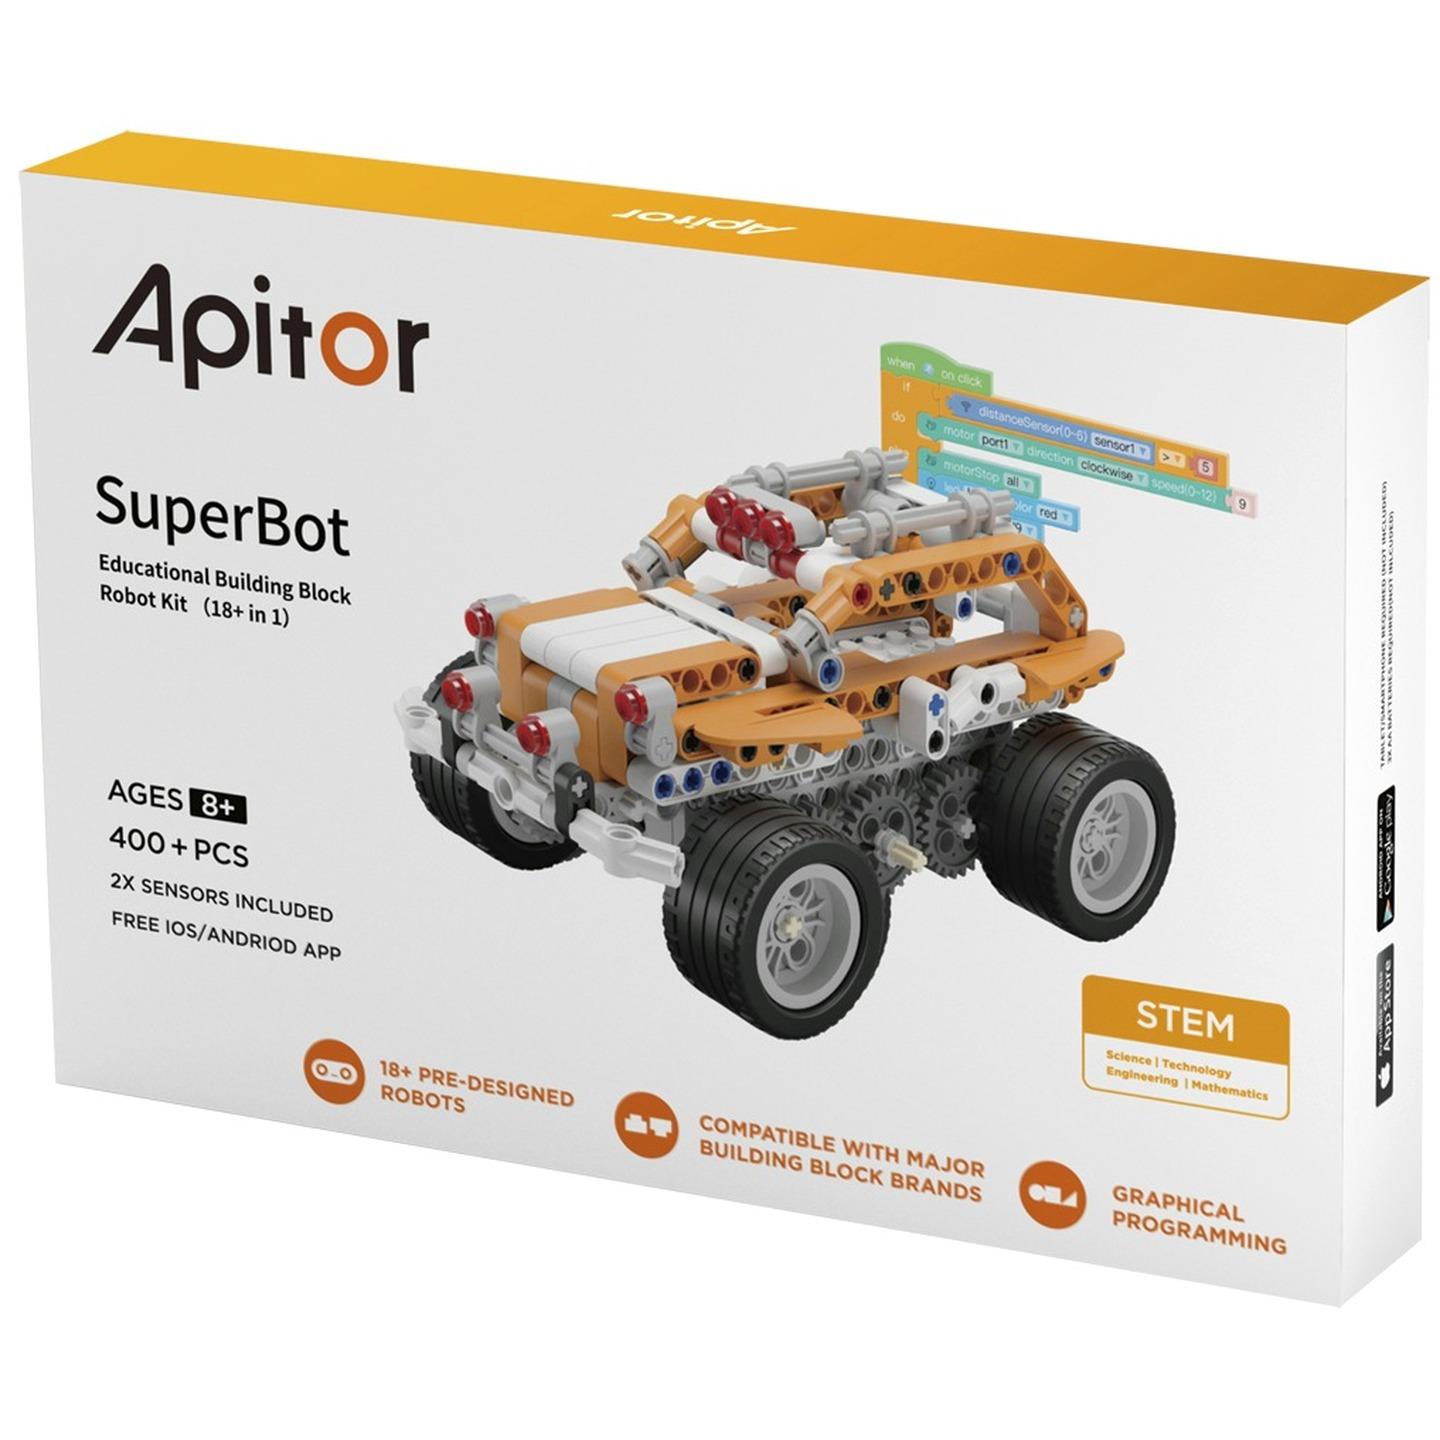 Apitor SuperBot Robot Kit with STEM Programmable